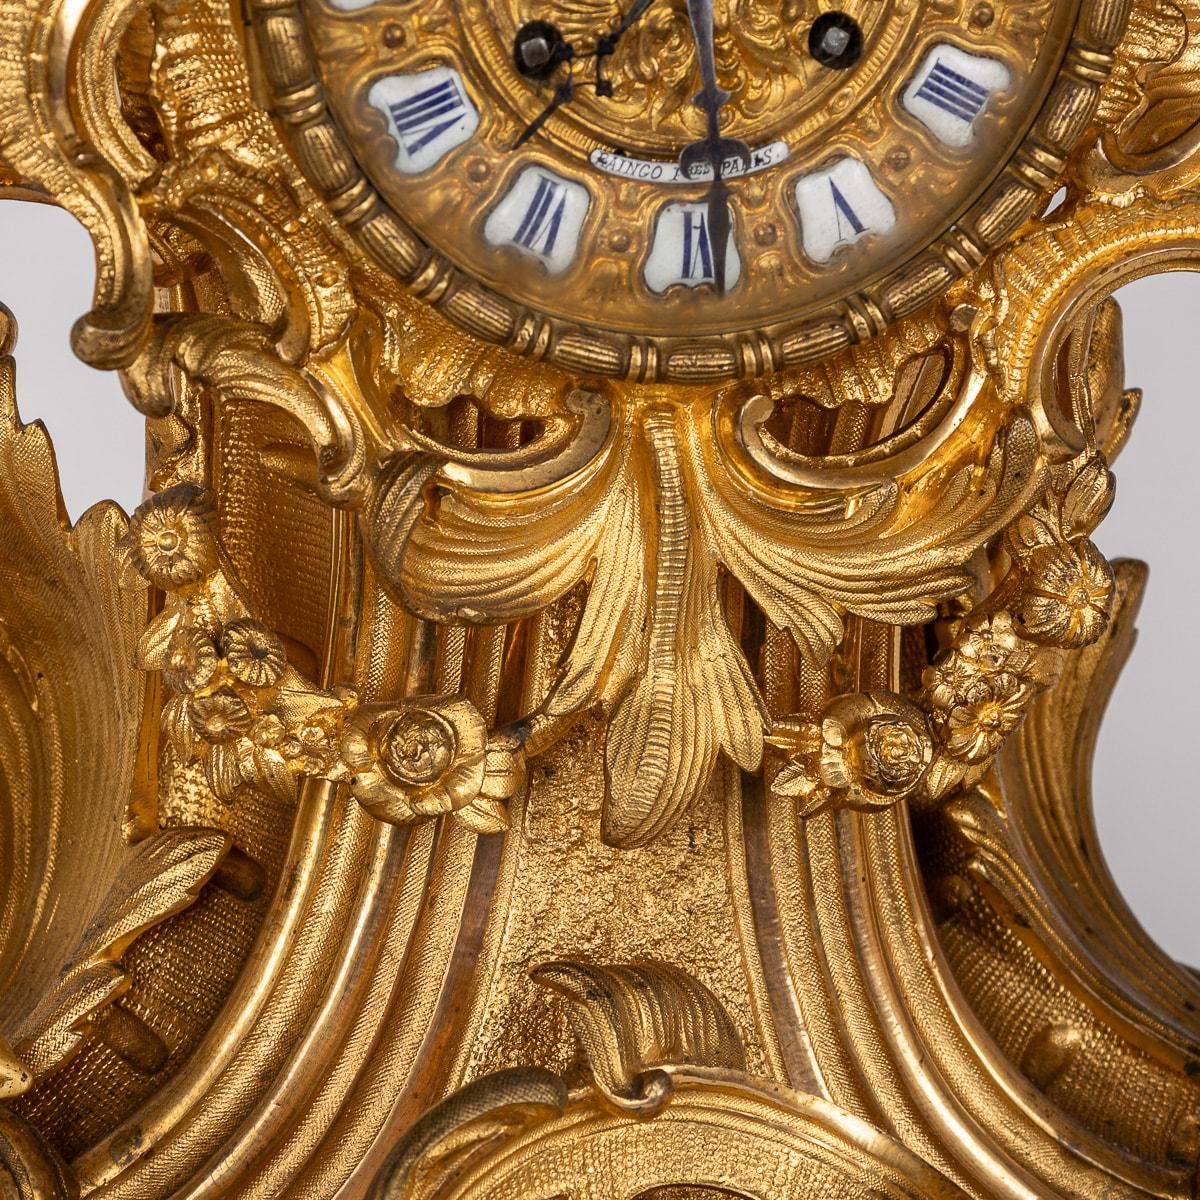 Antique 19th Century French Gilt Bronze Clock, Raingo Freres, Paris c.1850 For Sale 11